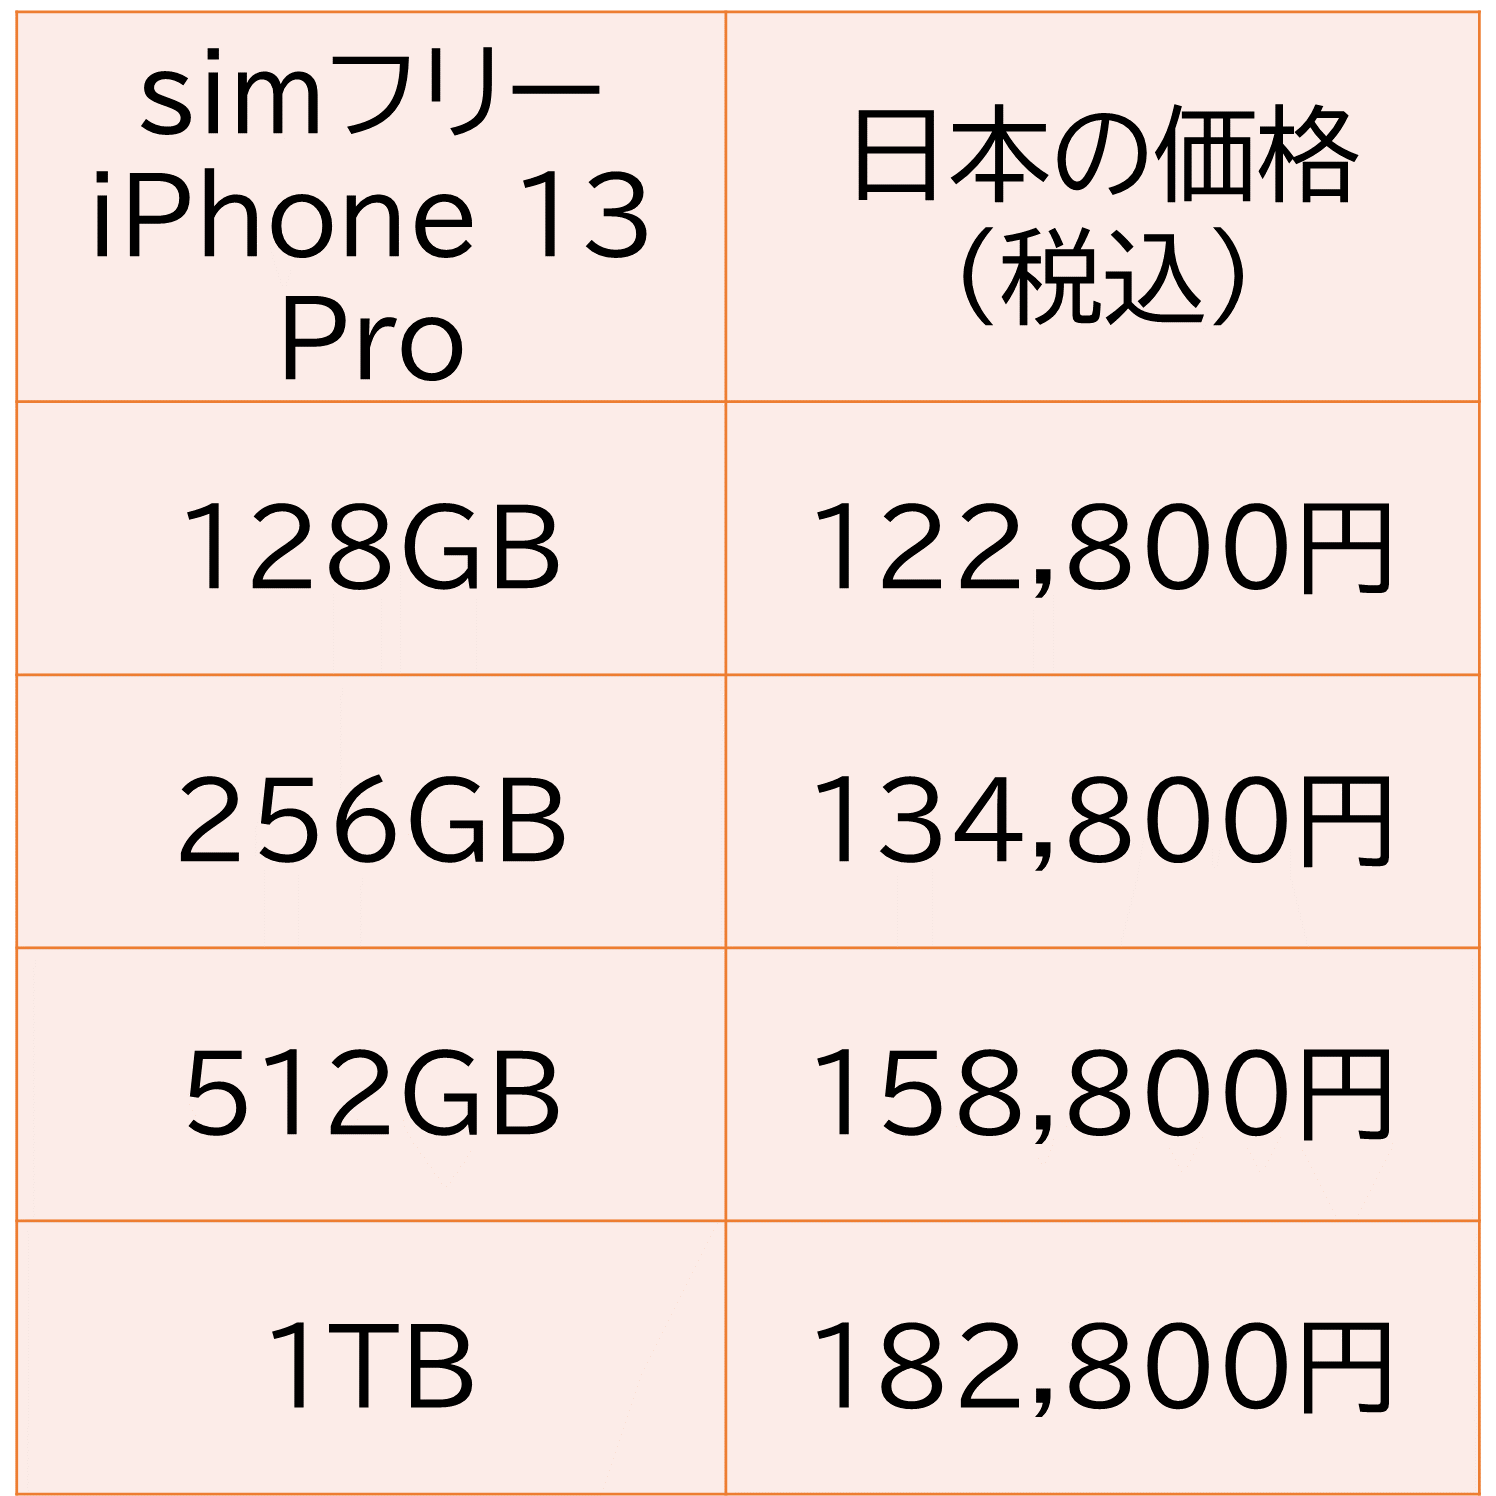 simフリーiPhone 13Pro 第三世代の販売価格